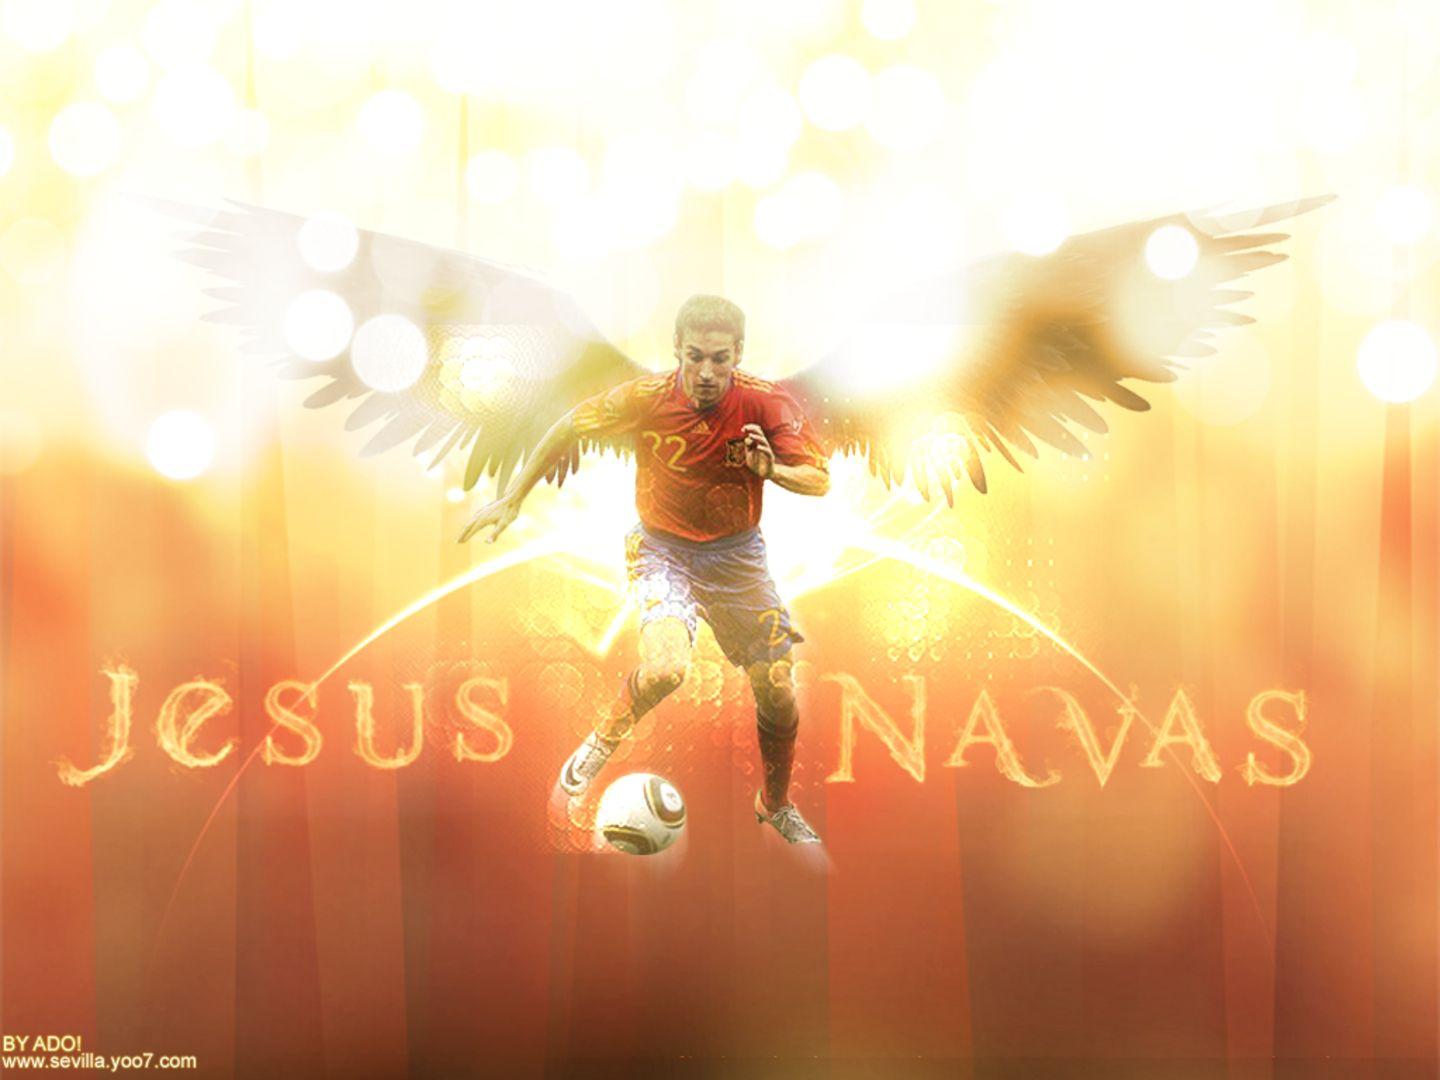 Jesús Navas HD Wallpaper and Background Image